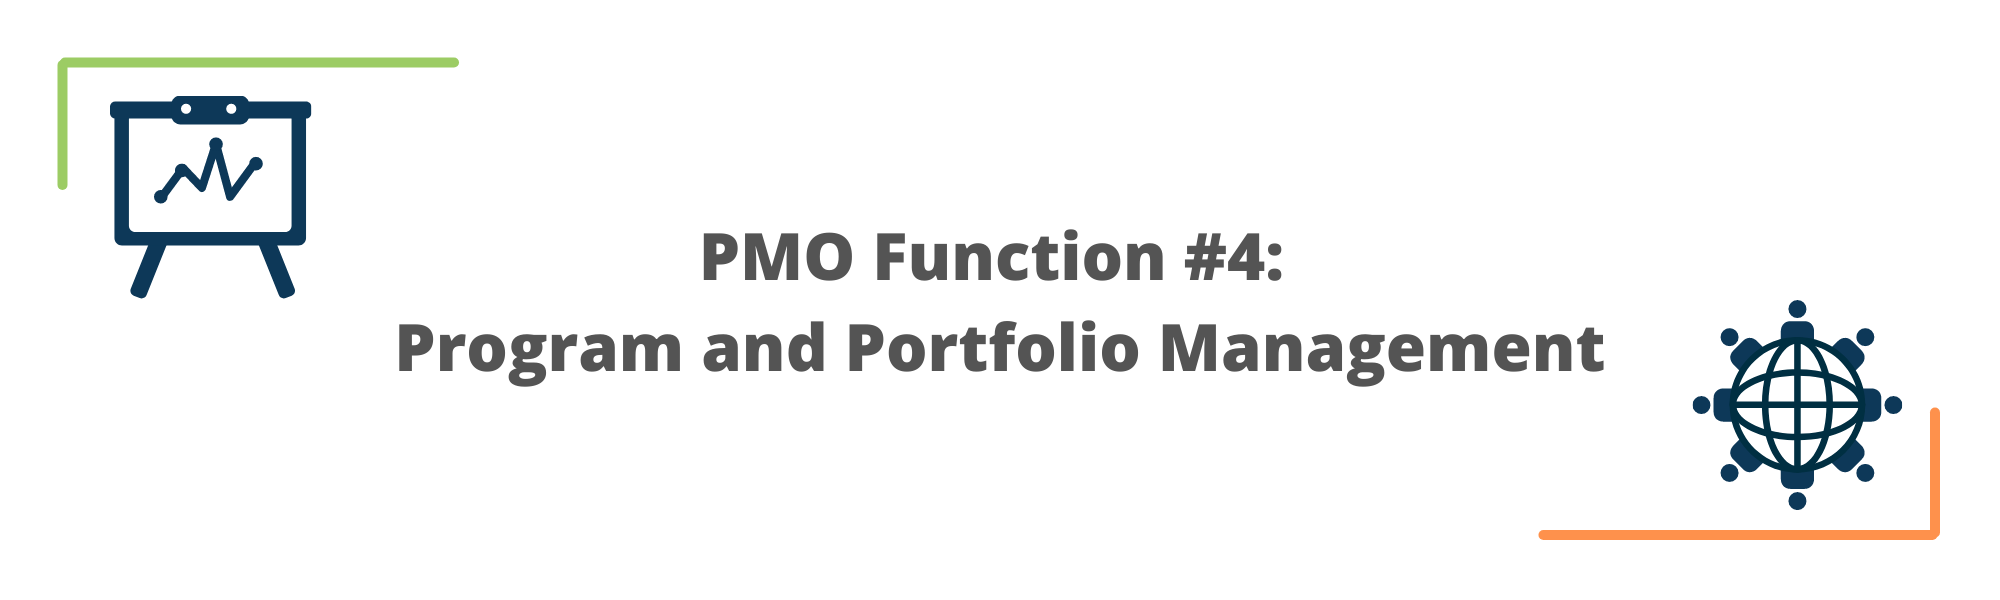 PMO Function #4 - Program and Portfolio Management